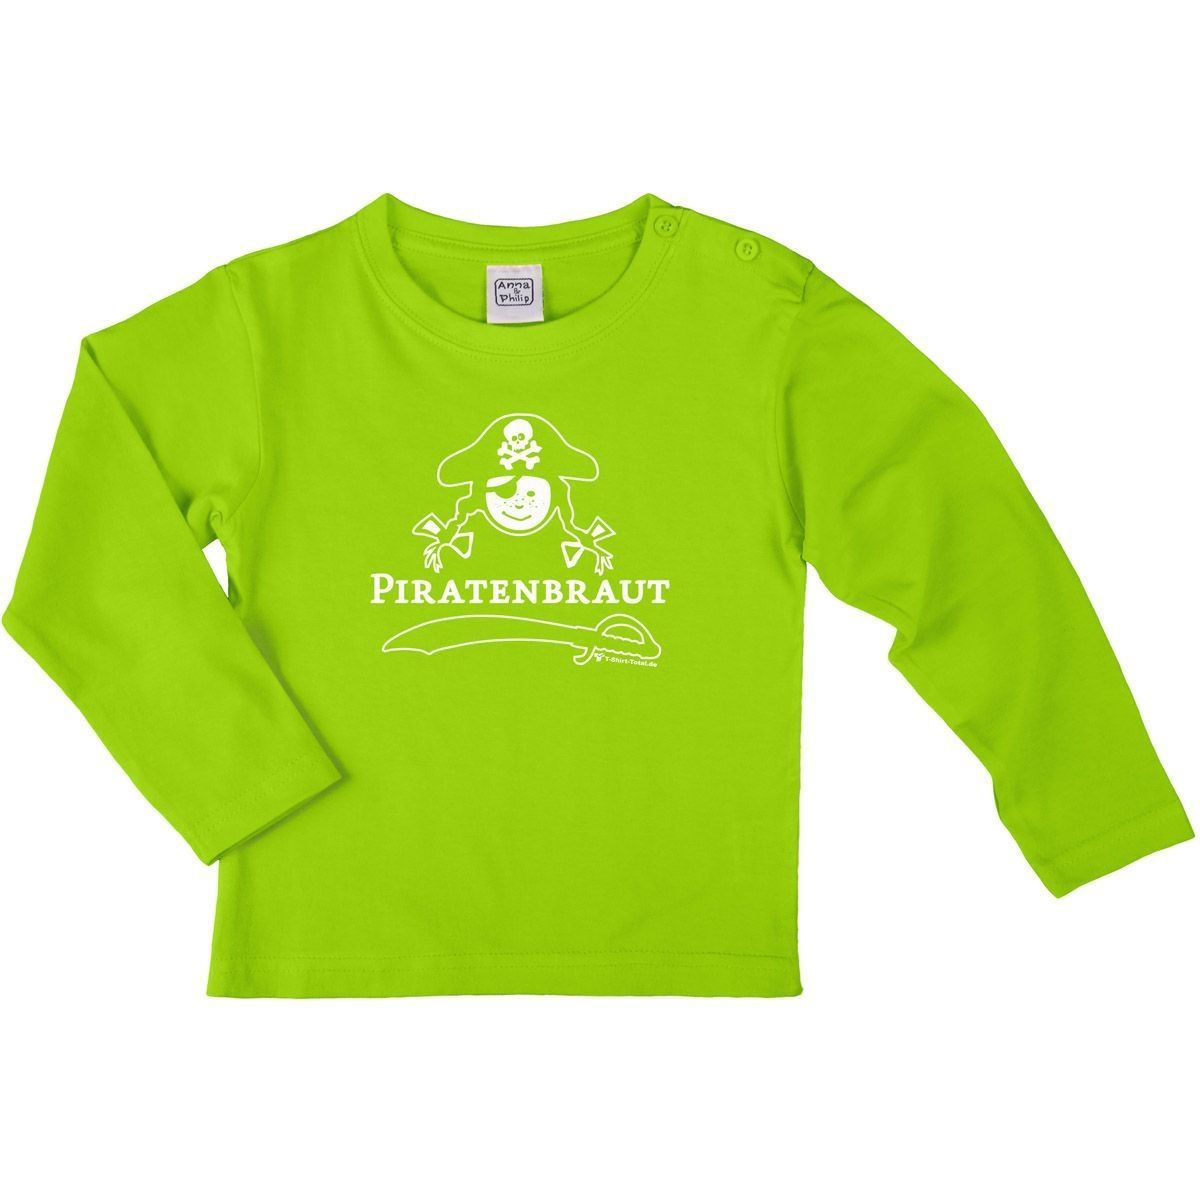 Piratenbraut Kinder Langarm Shirt hellgrün 110 / 116